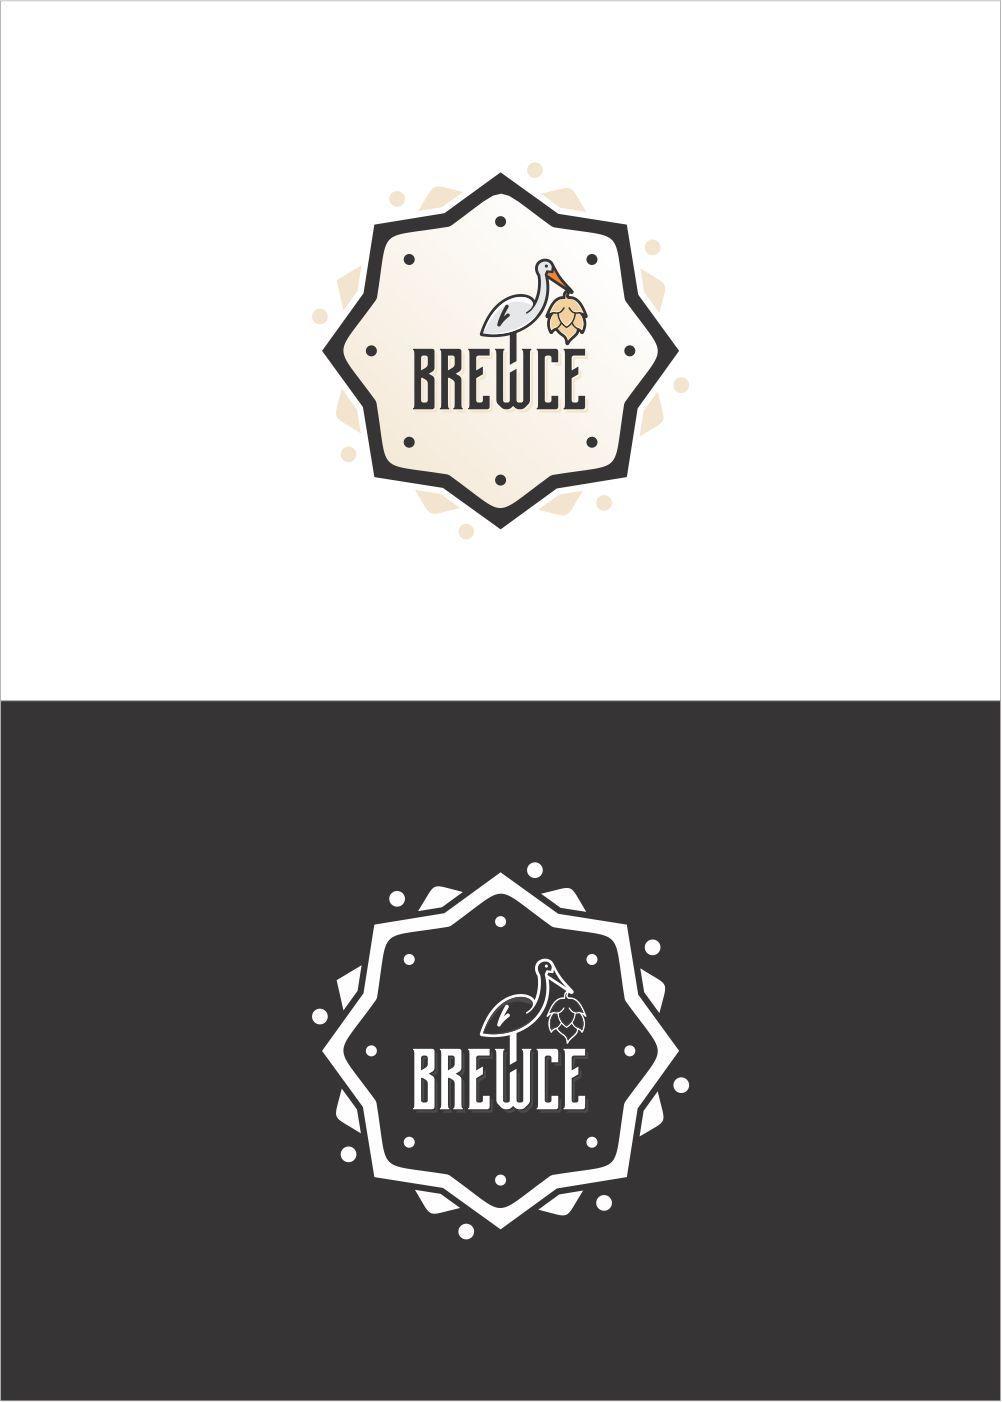 Baby DG Logo - Modern, Masculine, Brewery Logo Design for A Baby Named Brewce